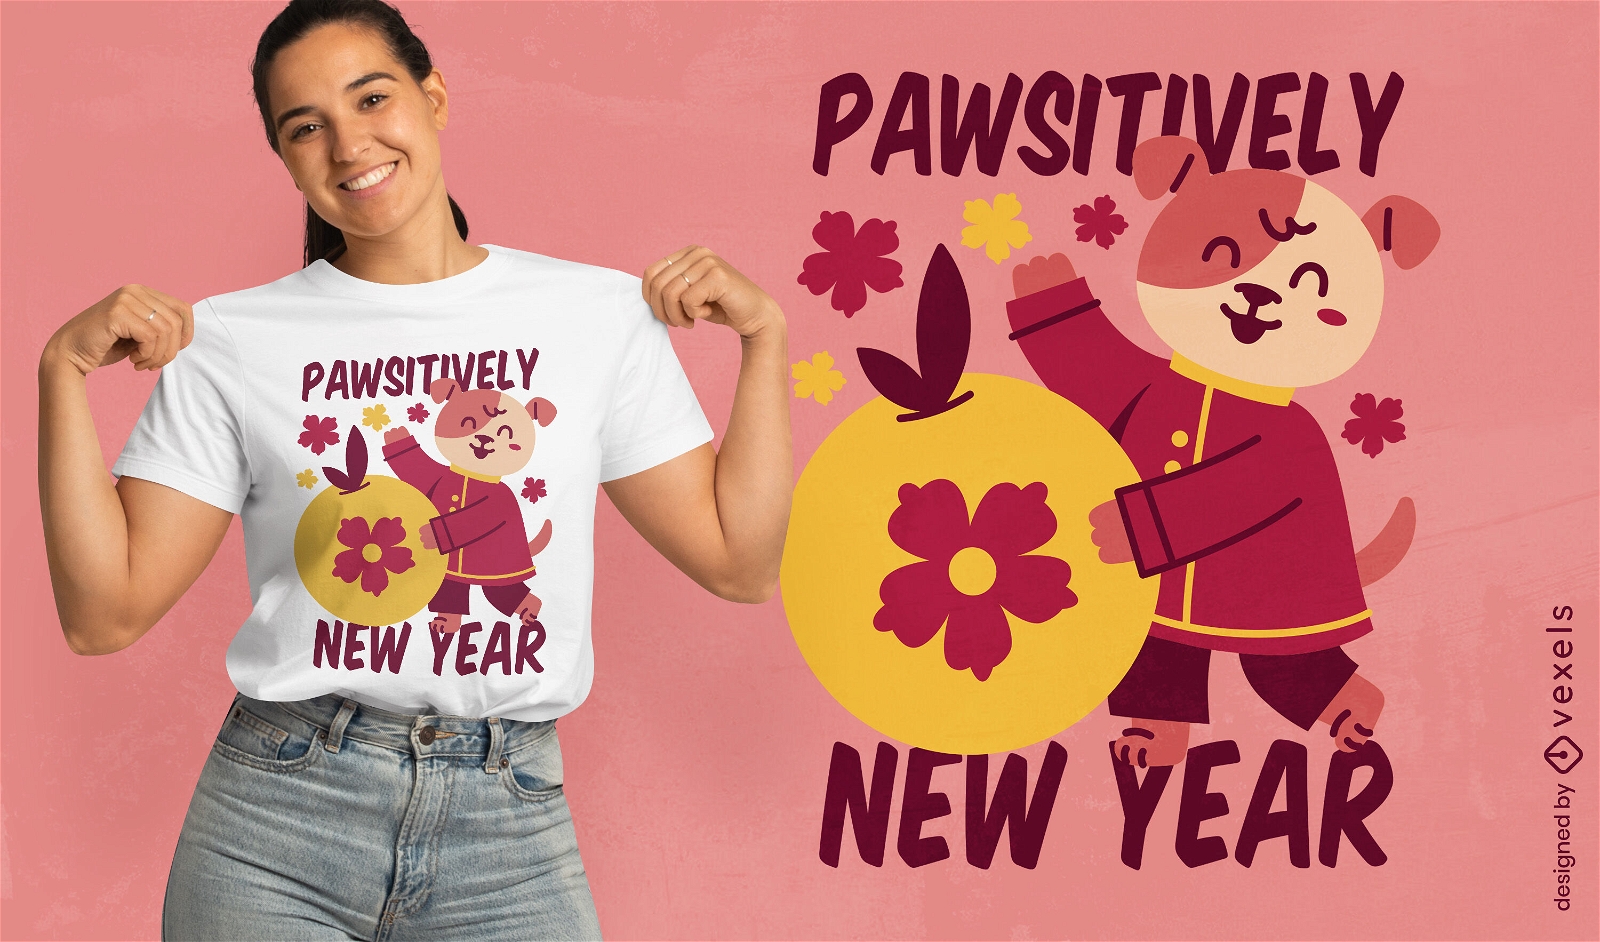 Optimistic new year t-shirt design